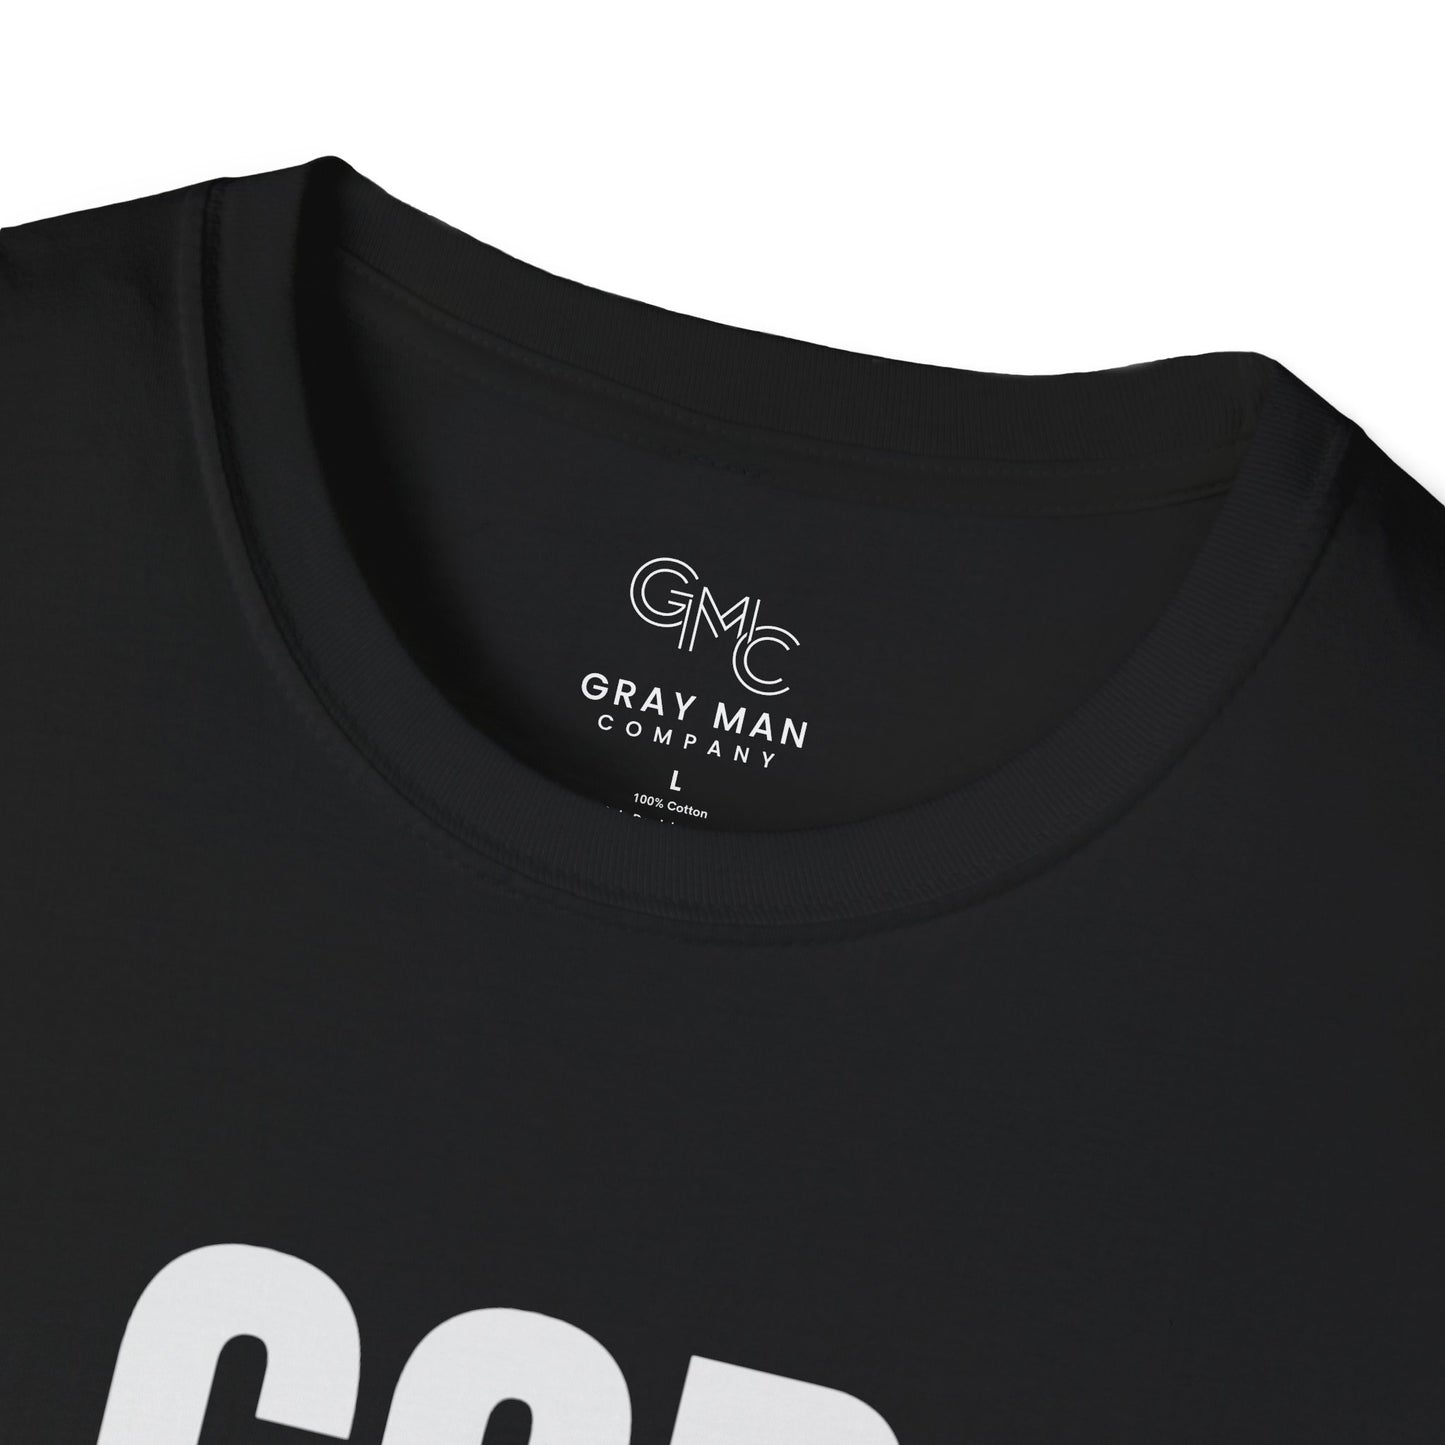 EDC Graphic T-Shirt - GOD GUNS & GRENADES